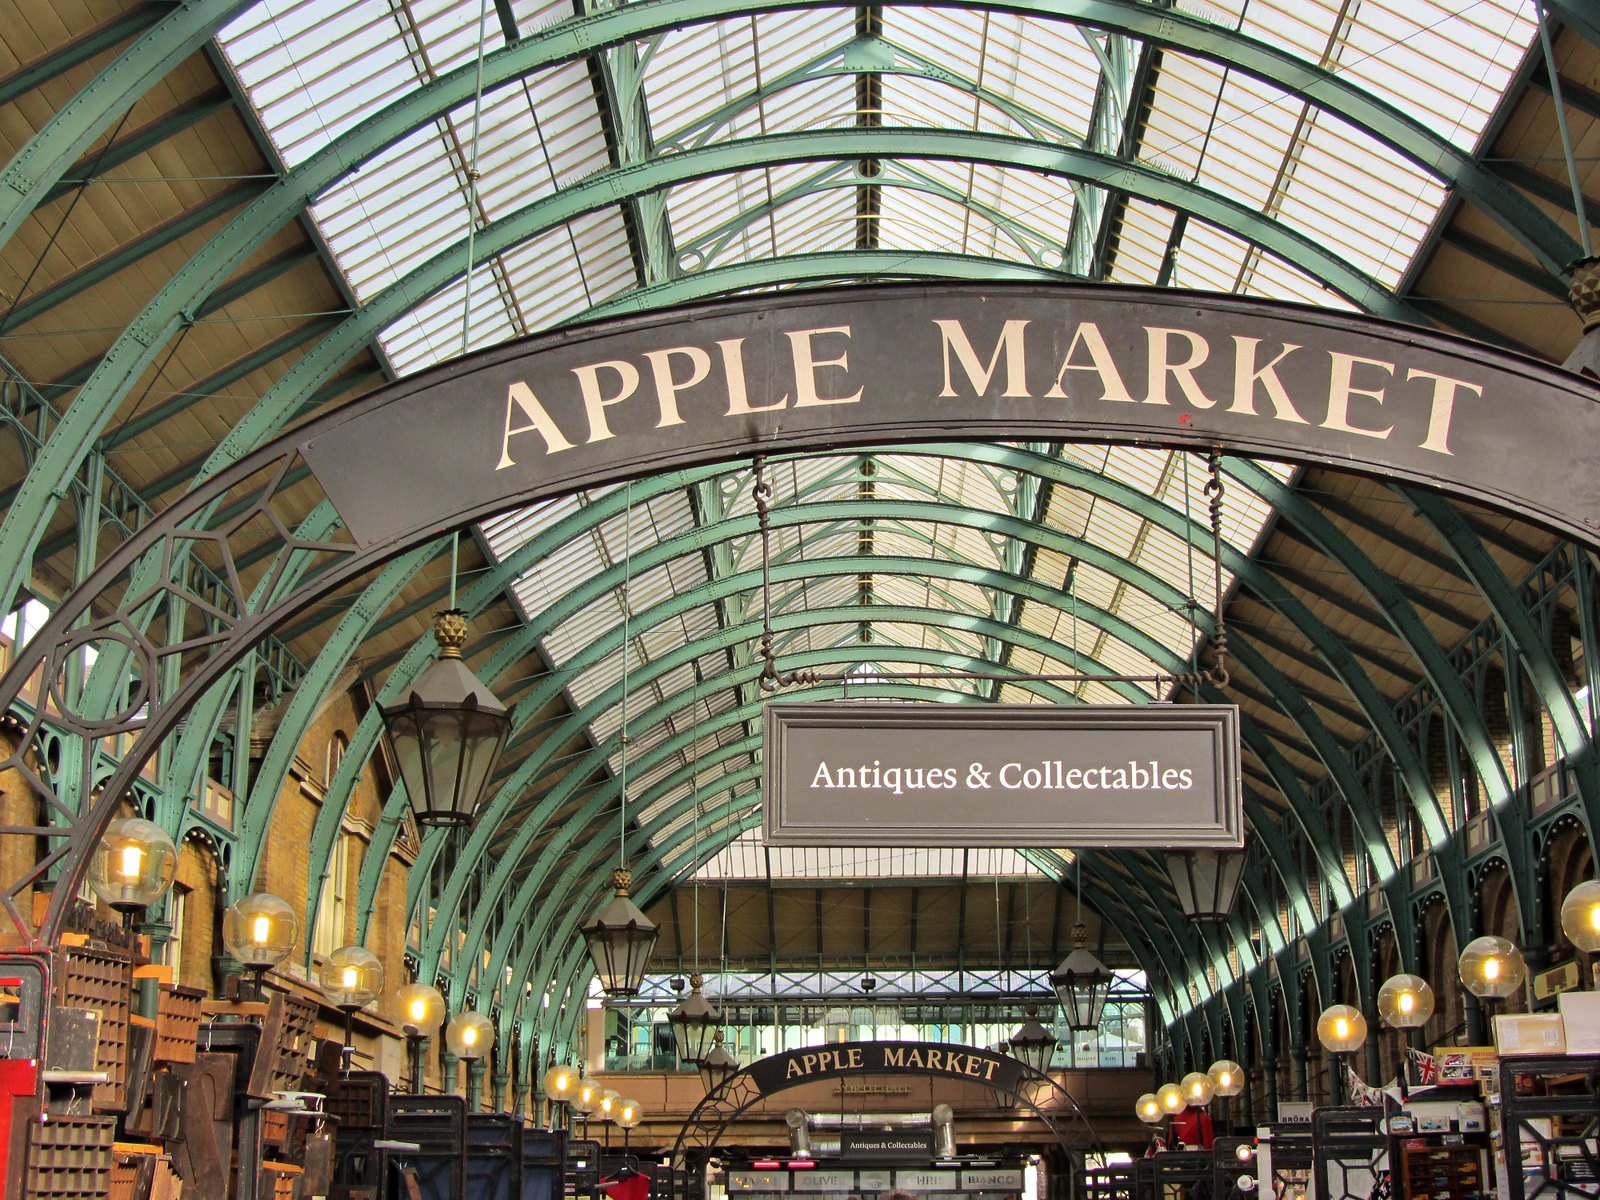 The Apple Market, Covent Garden. Credit Roman Hobler, flickr